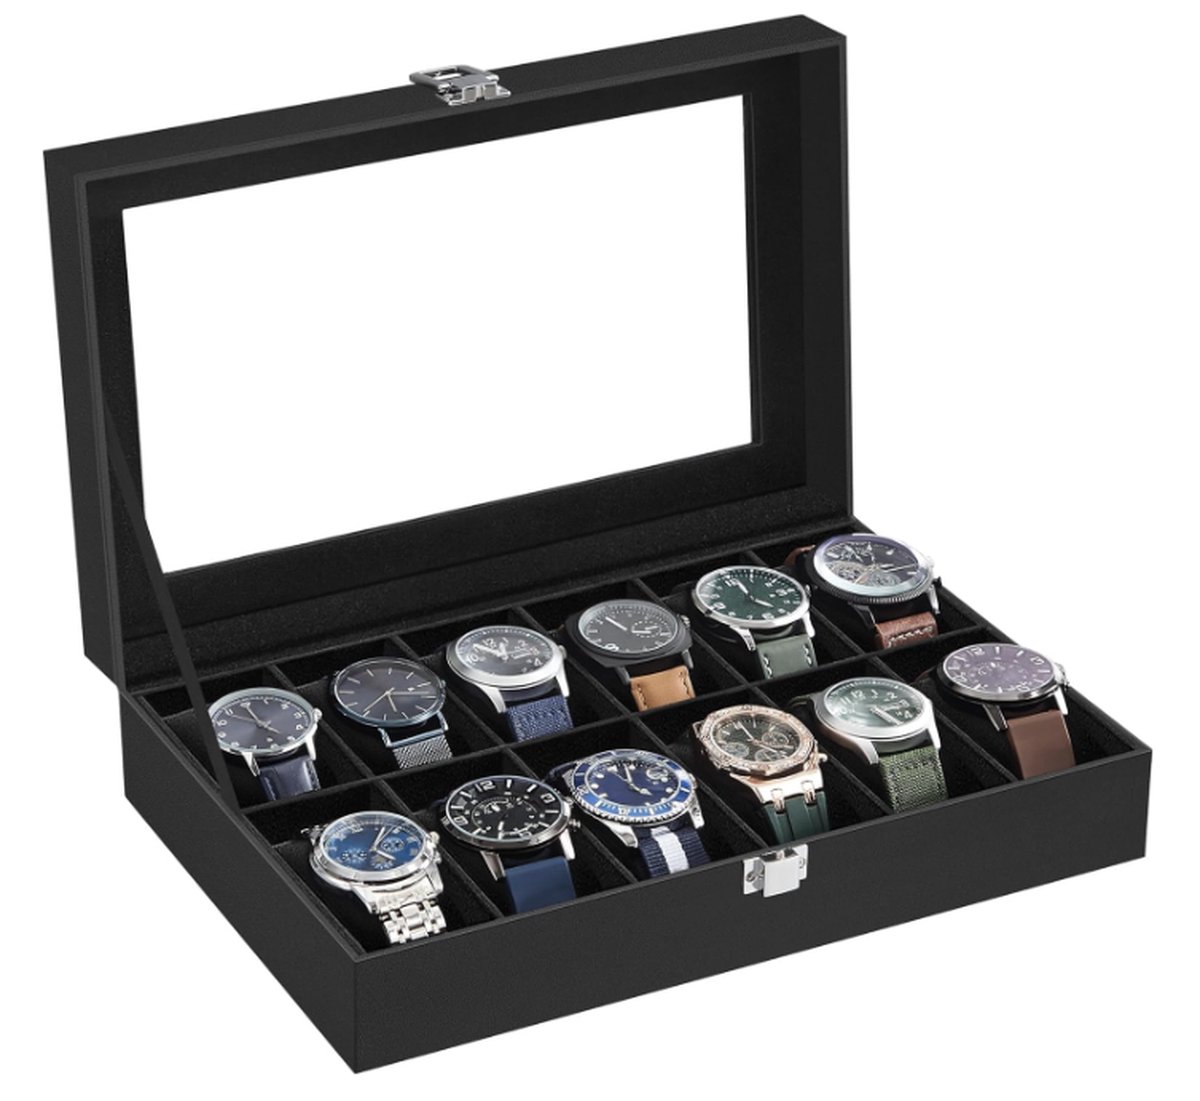 orion store - 12 Horloge Armband Bangle Doos Display Opbergkoffer (Geheel Zwart 12 Horloges) - 20.2cm x 30.3cm x 7.8cm